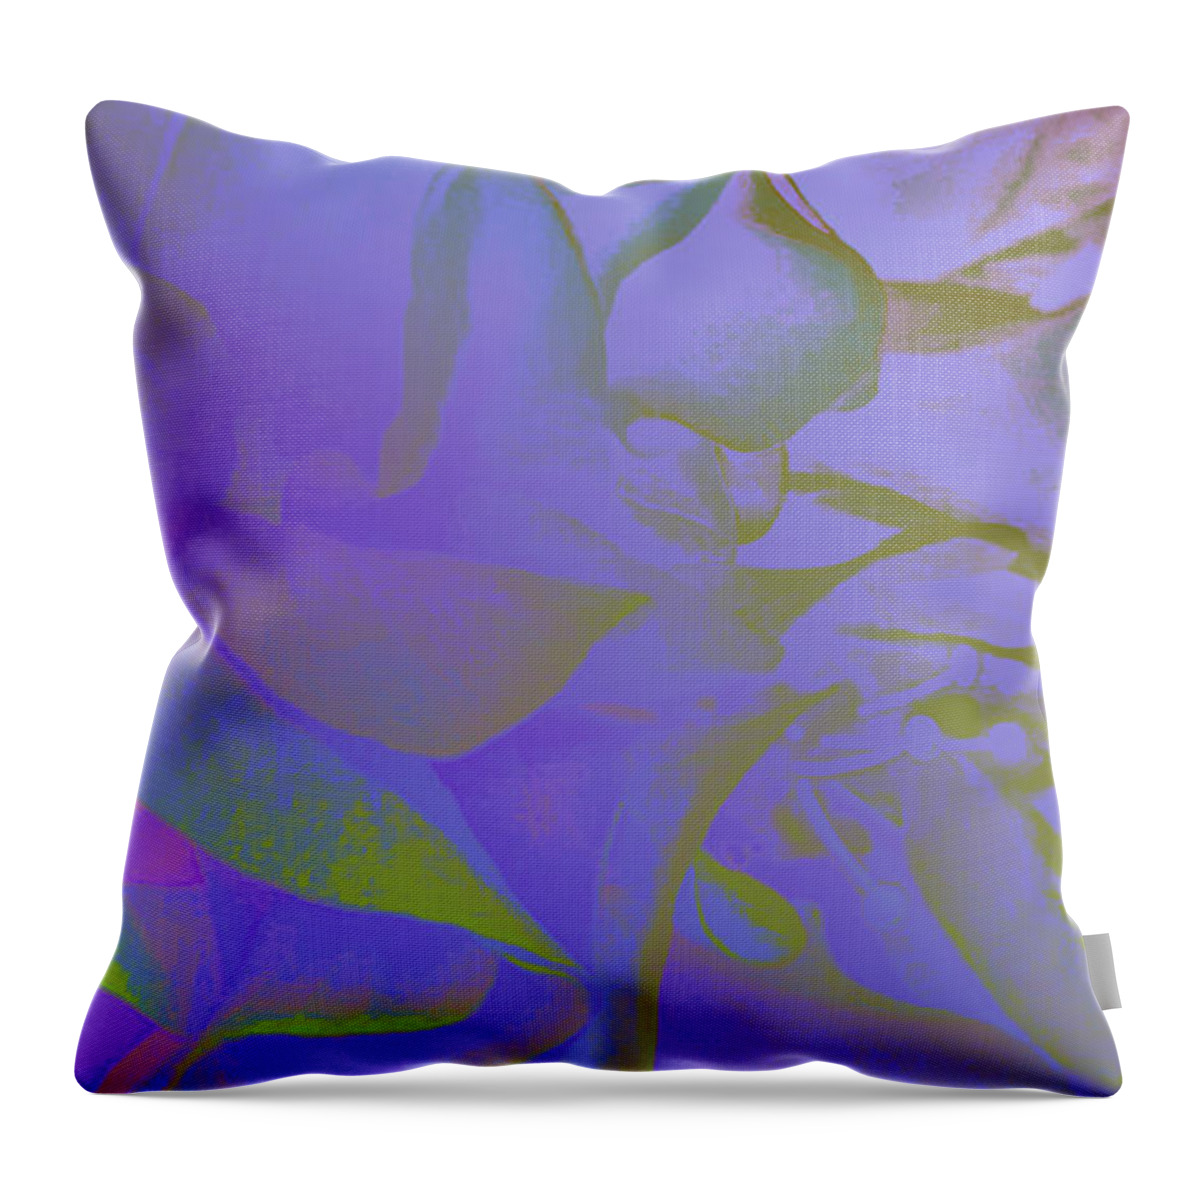 Pastels Soft Billowing Peaceful Throw Pillow featuring the digital art Softening Aura by Glenn Hernandez